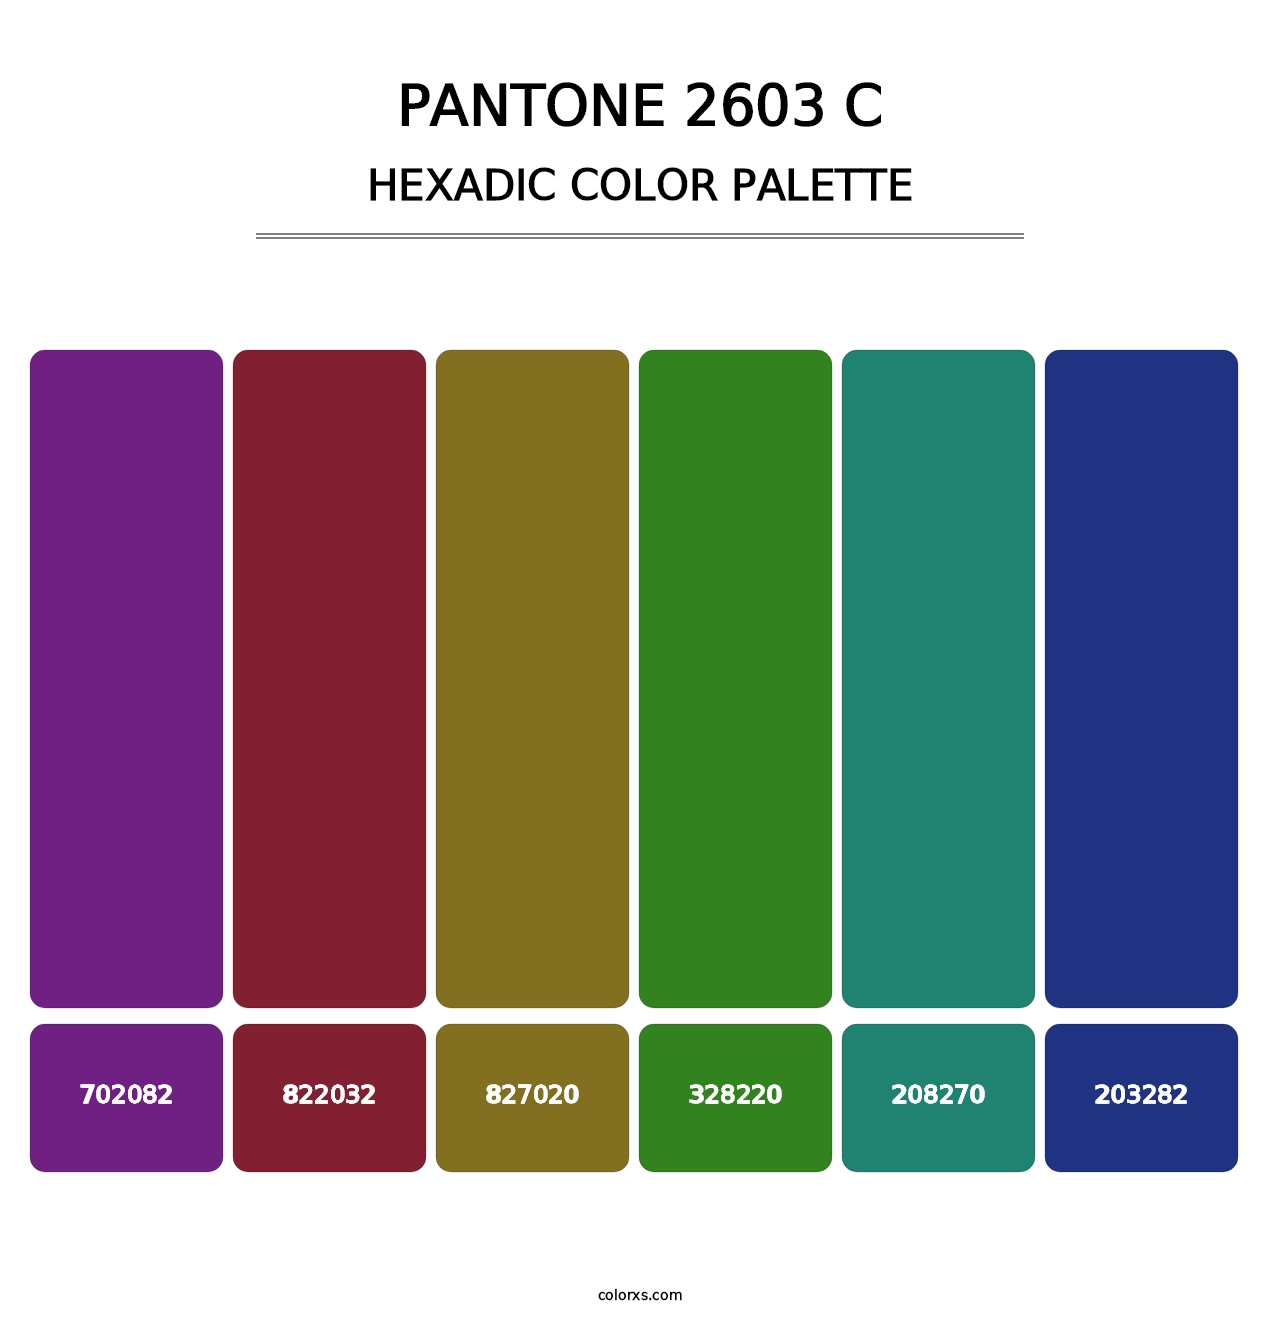 PANTONE 2603 C - Hexadic Color Palette